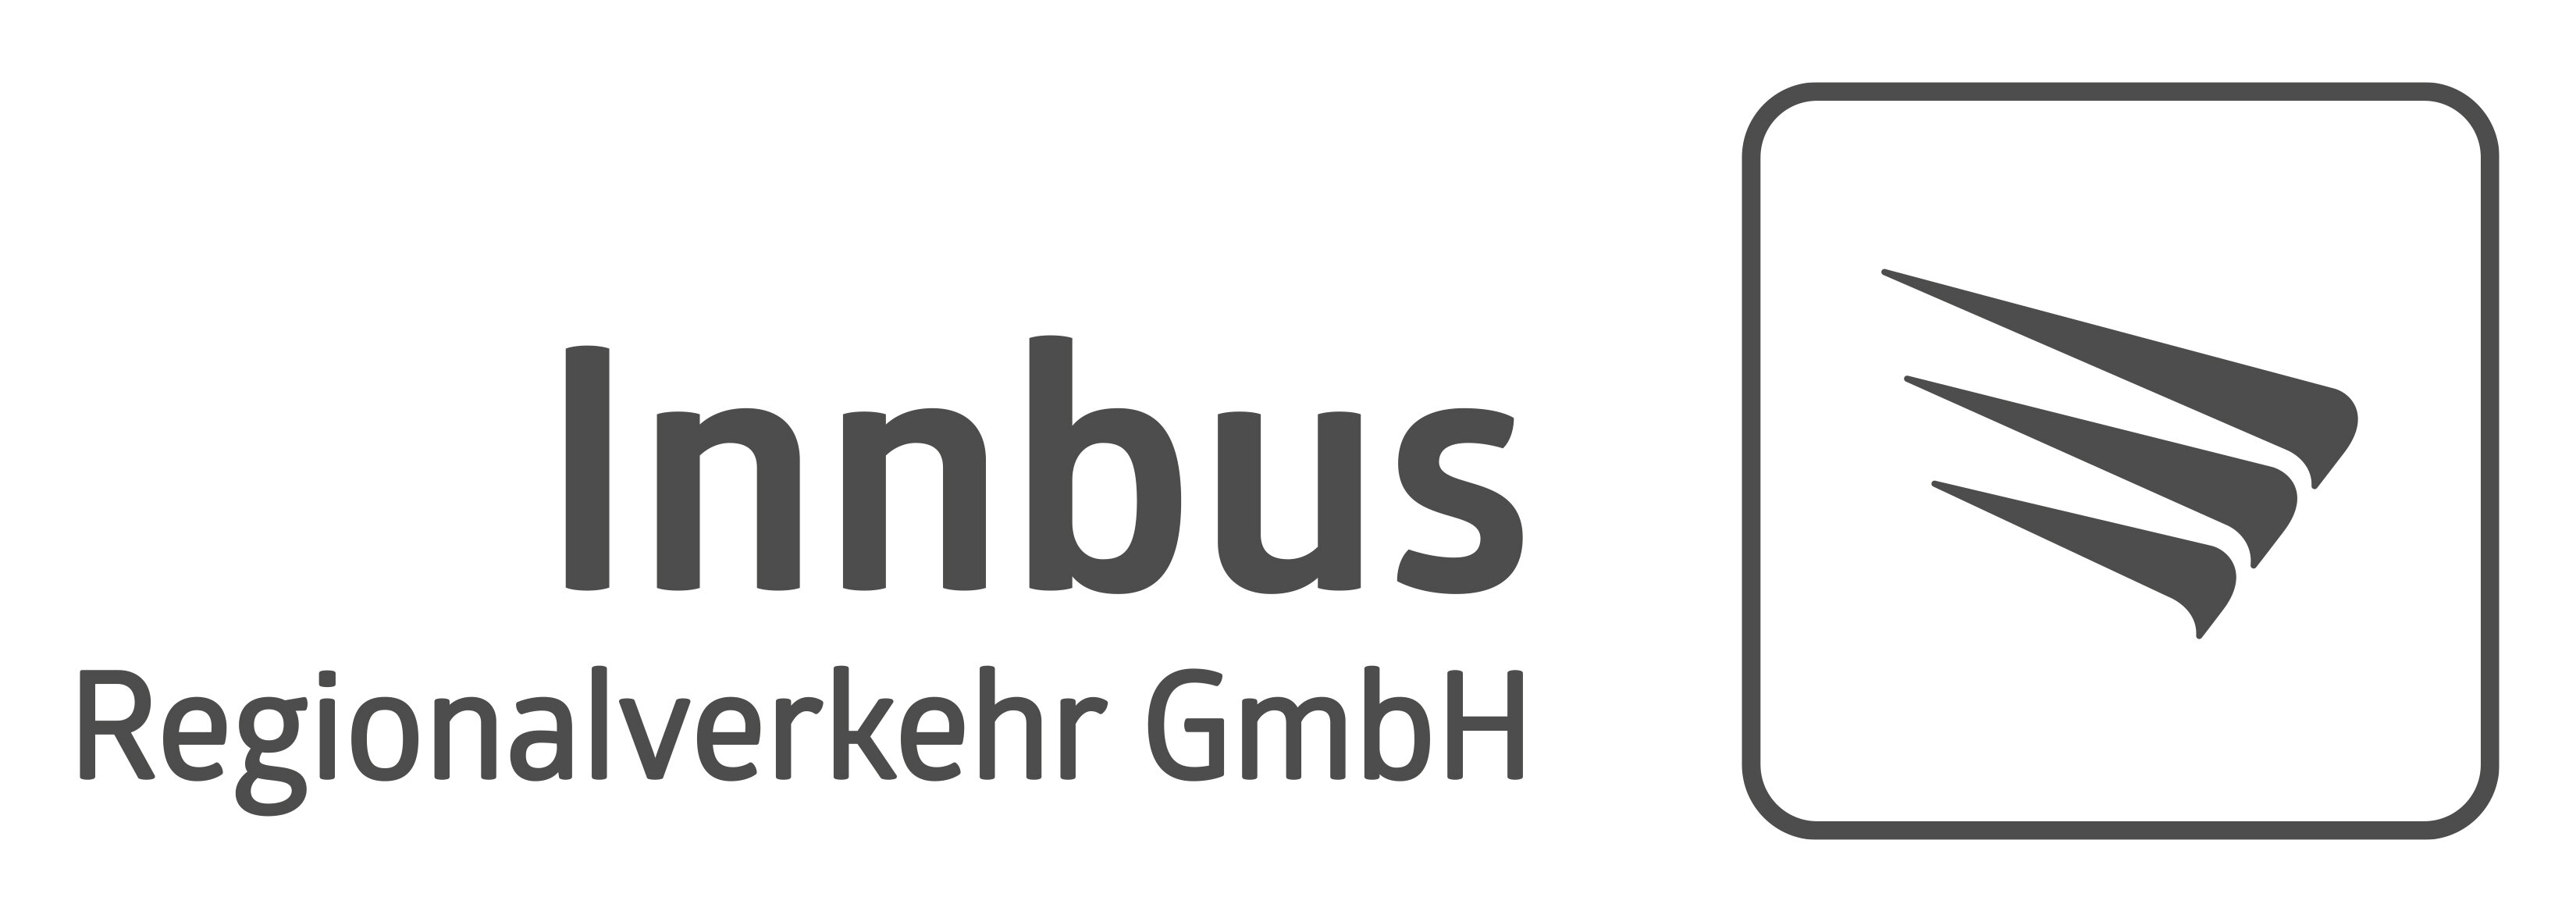 Innbus Regionalverkehr GmbH